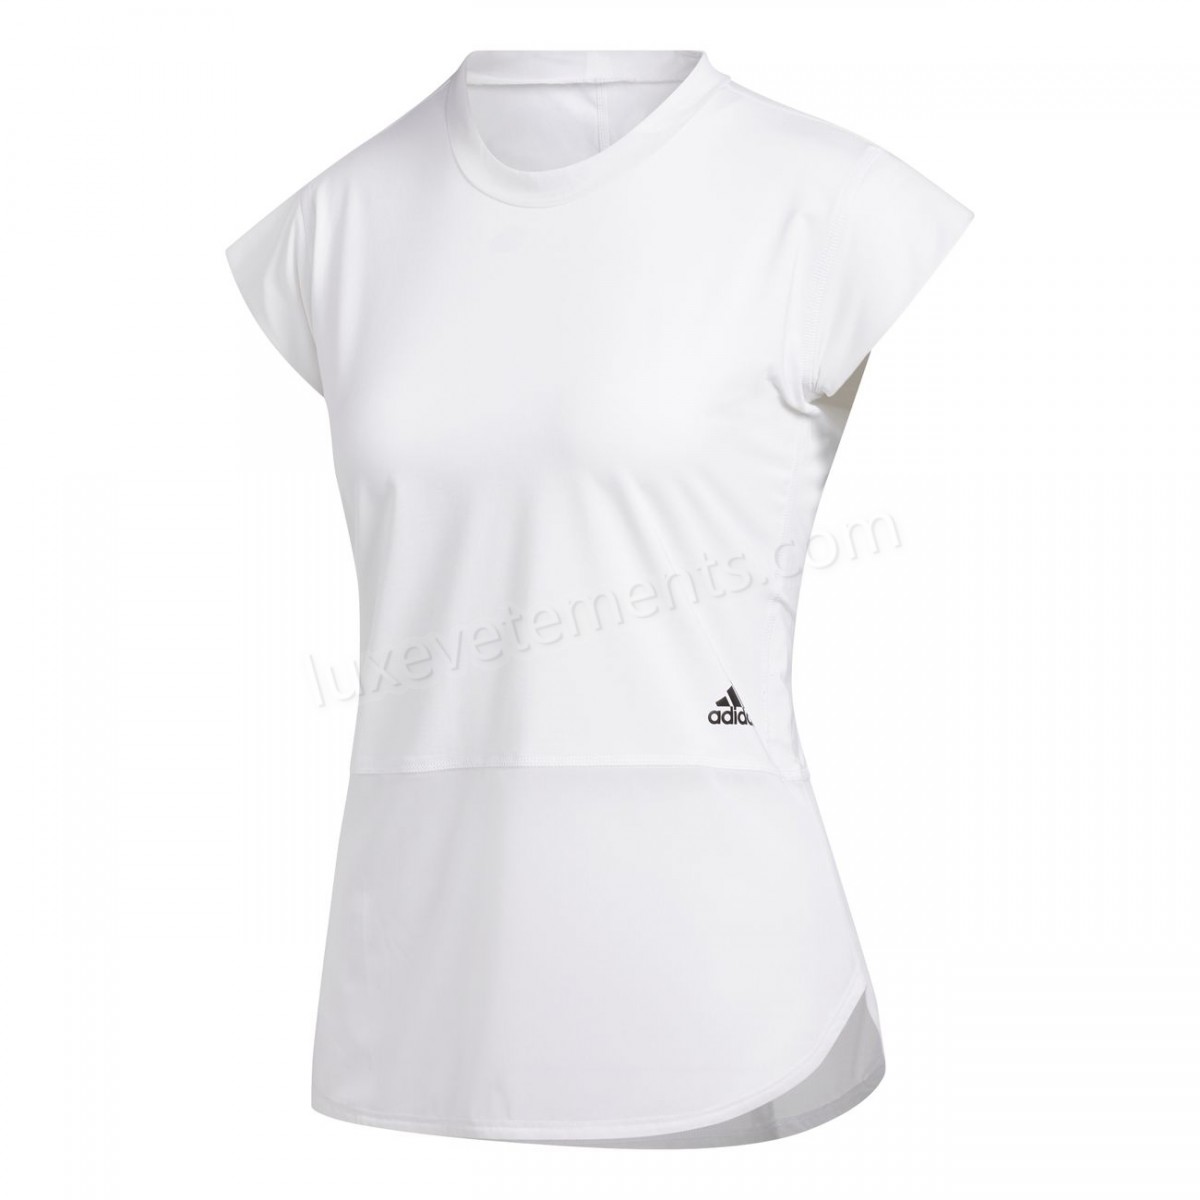 Adidas-Fitness femme ADIDAS T-shirt femme adidas Power Mesh Vente en ligne - -1